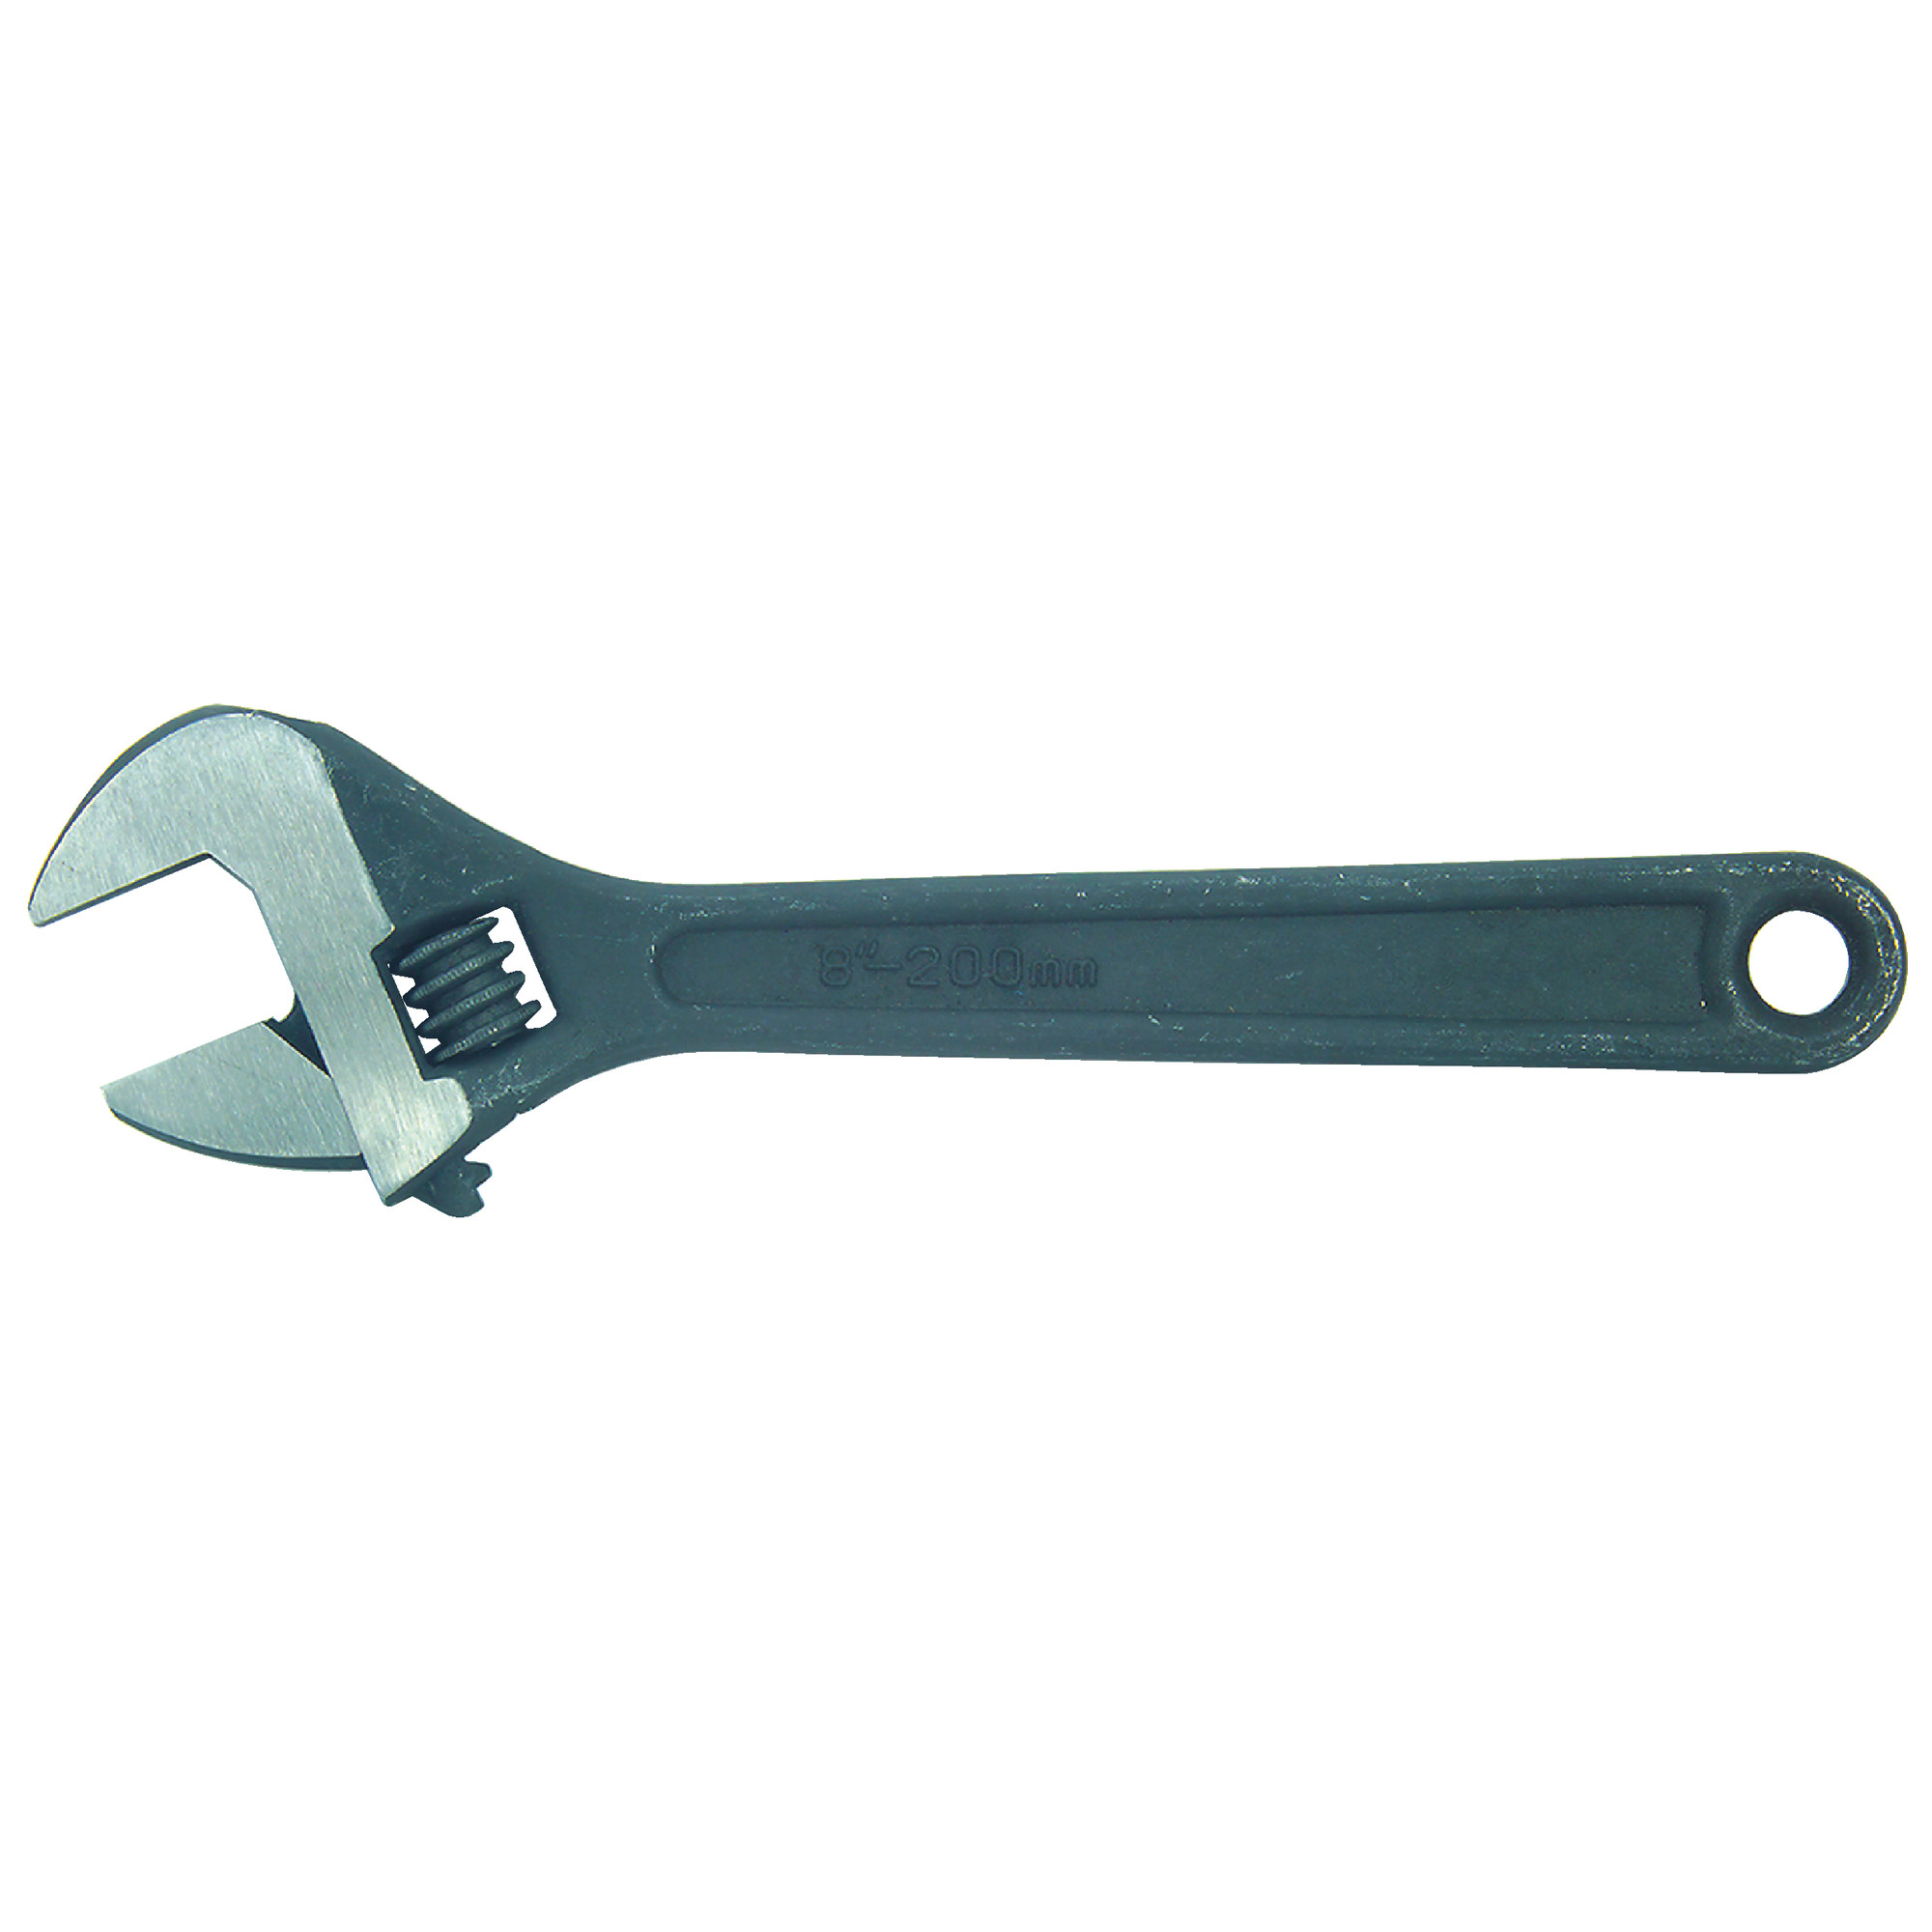 Adjustable Wrench - Model: TTC21212   SIZE: 12"